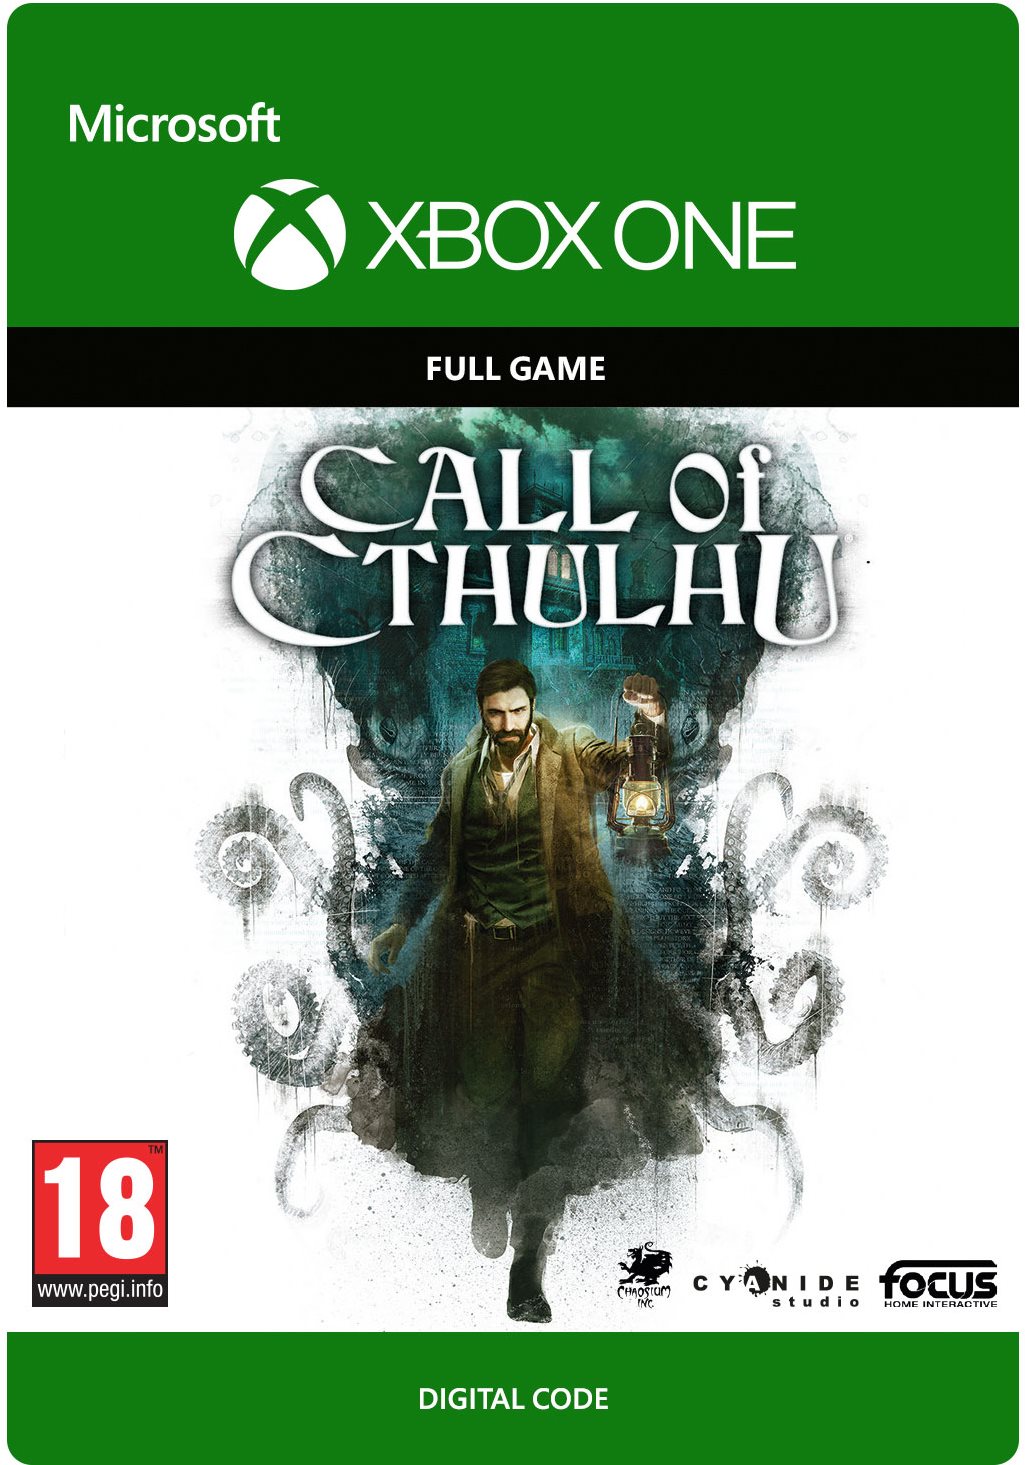 Call of Cthulhu - Xbox DIGITAL